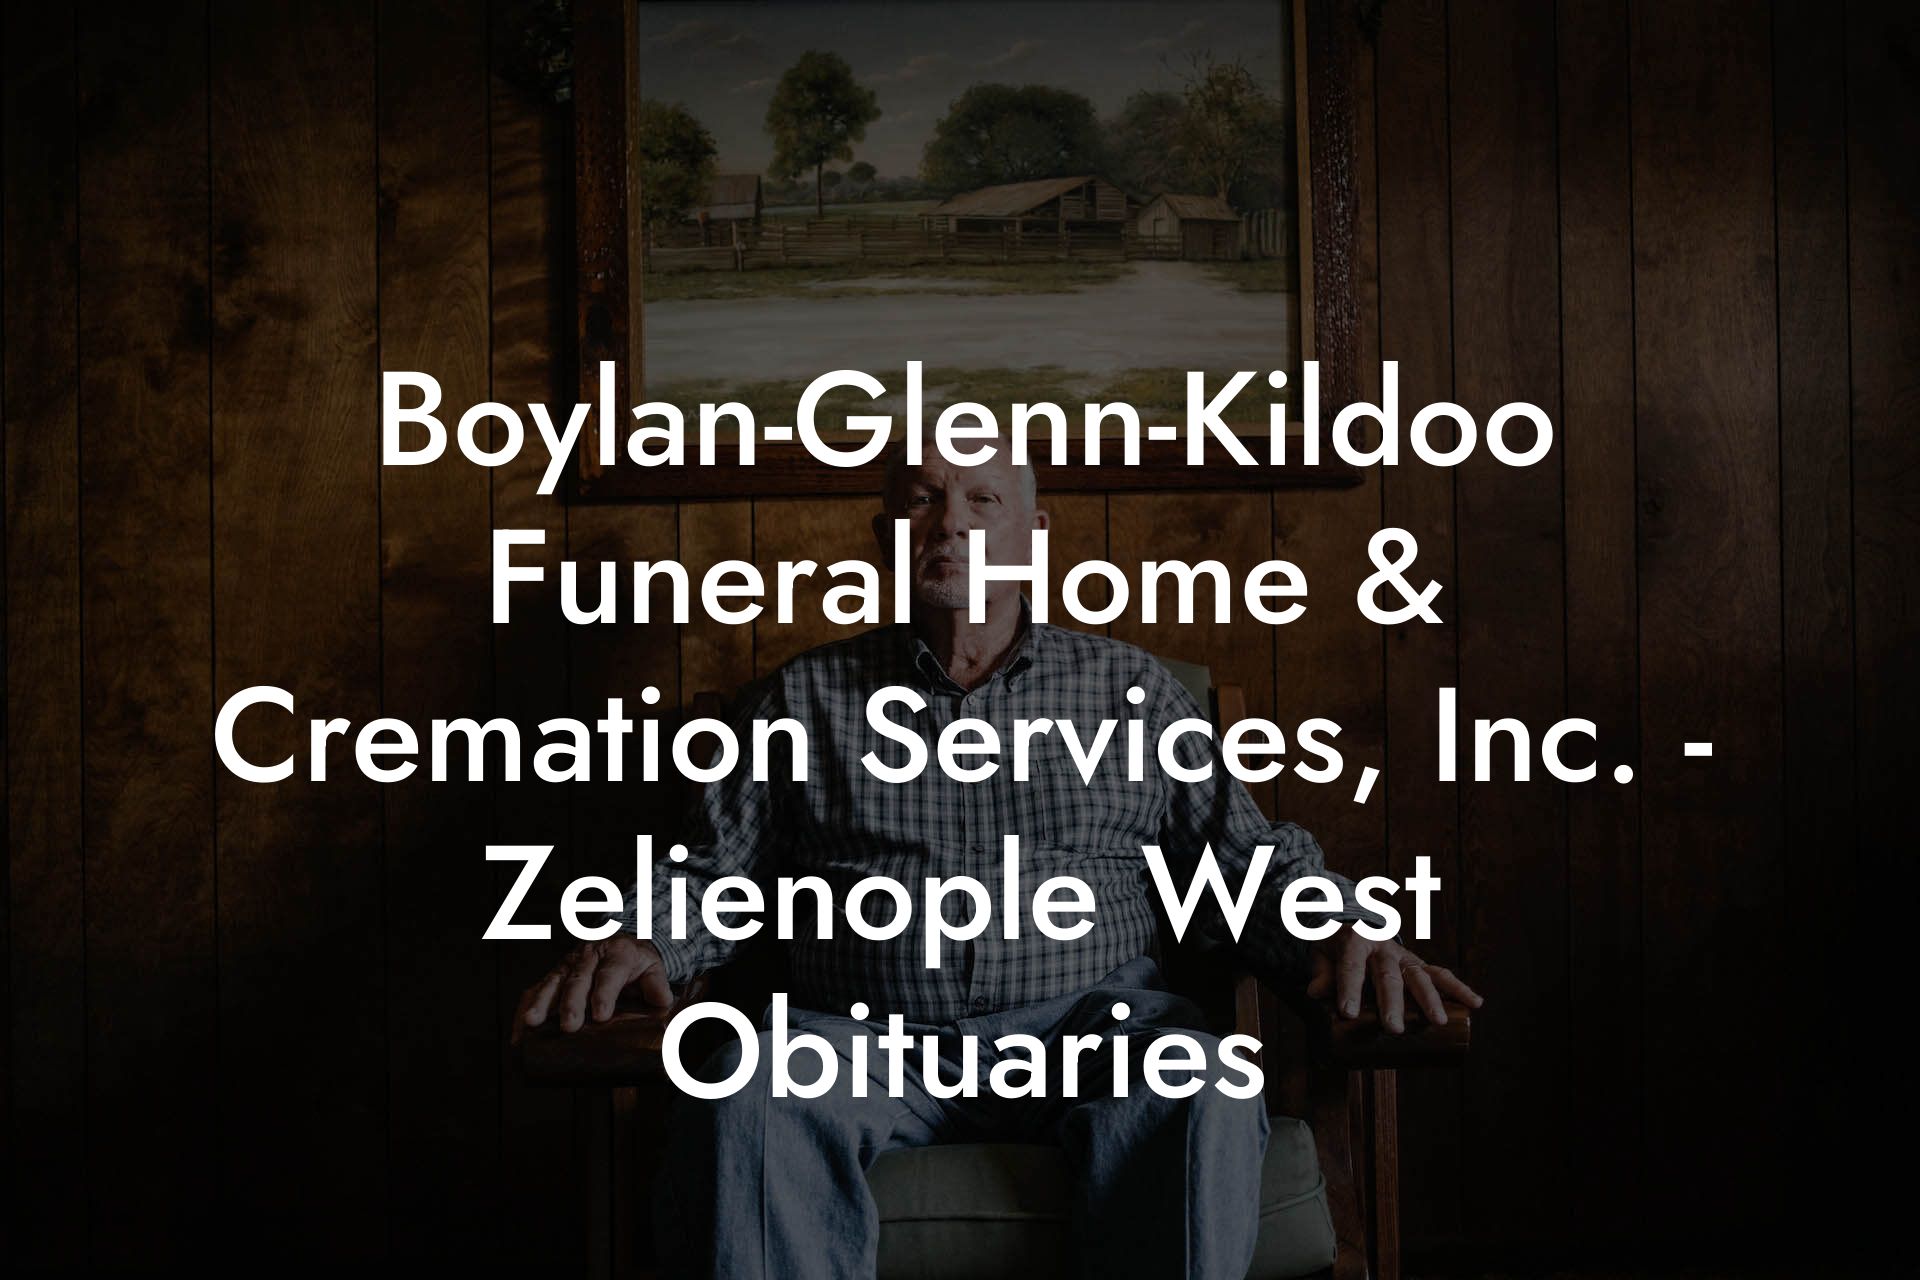 Boylan-Glenn-Kildoo Funeral Home & Cremation Services, Inc. - Zelienople West Obituaries